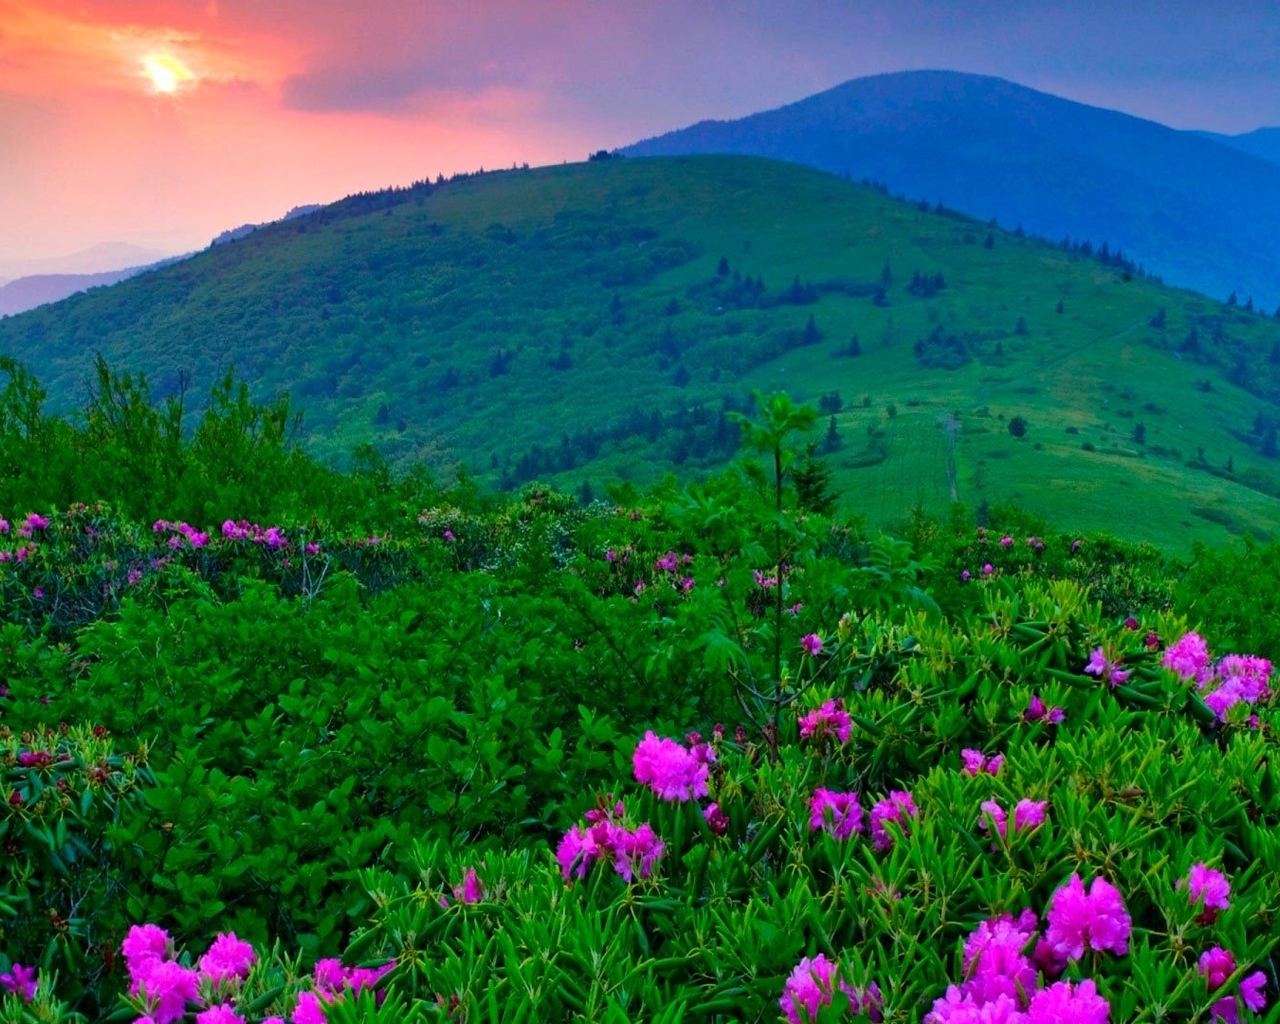 Image: Field, flowers, greenery, mountains, sky, sun, horizon